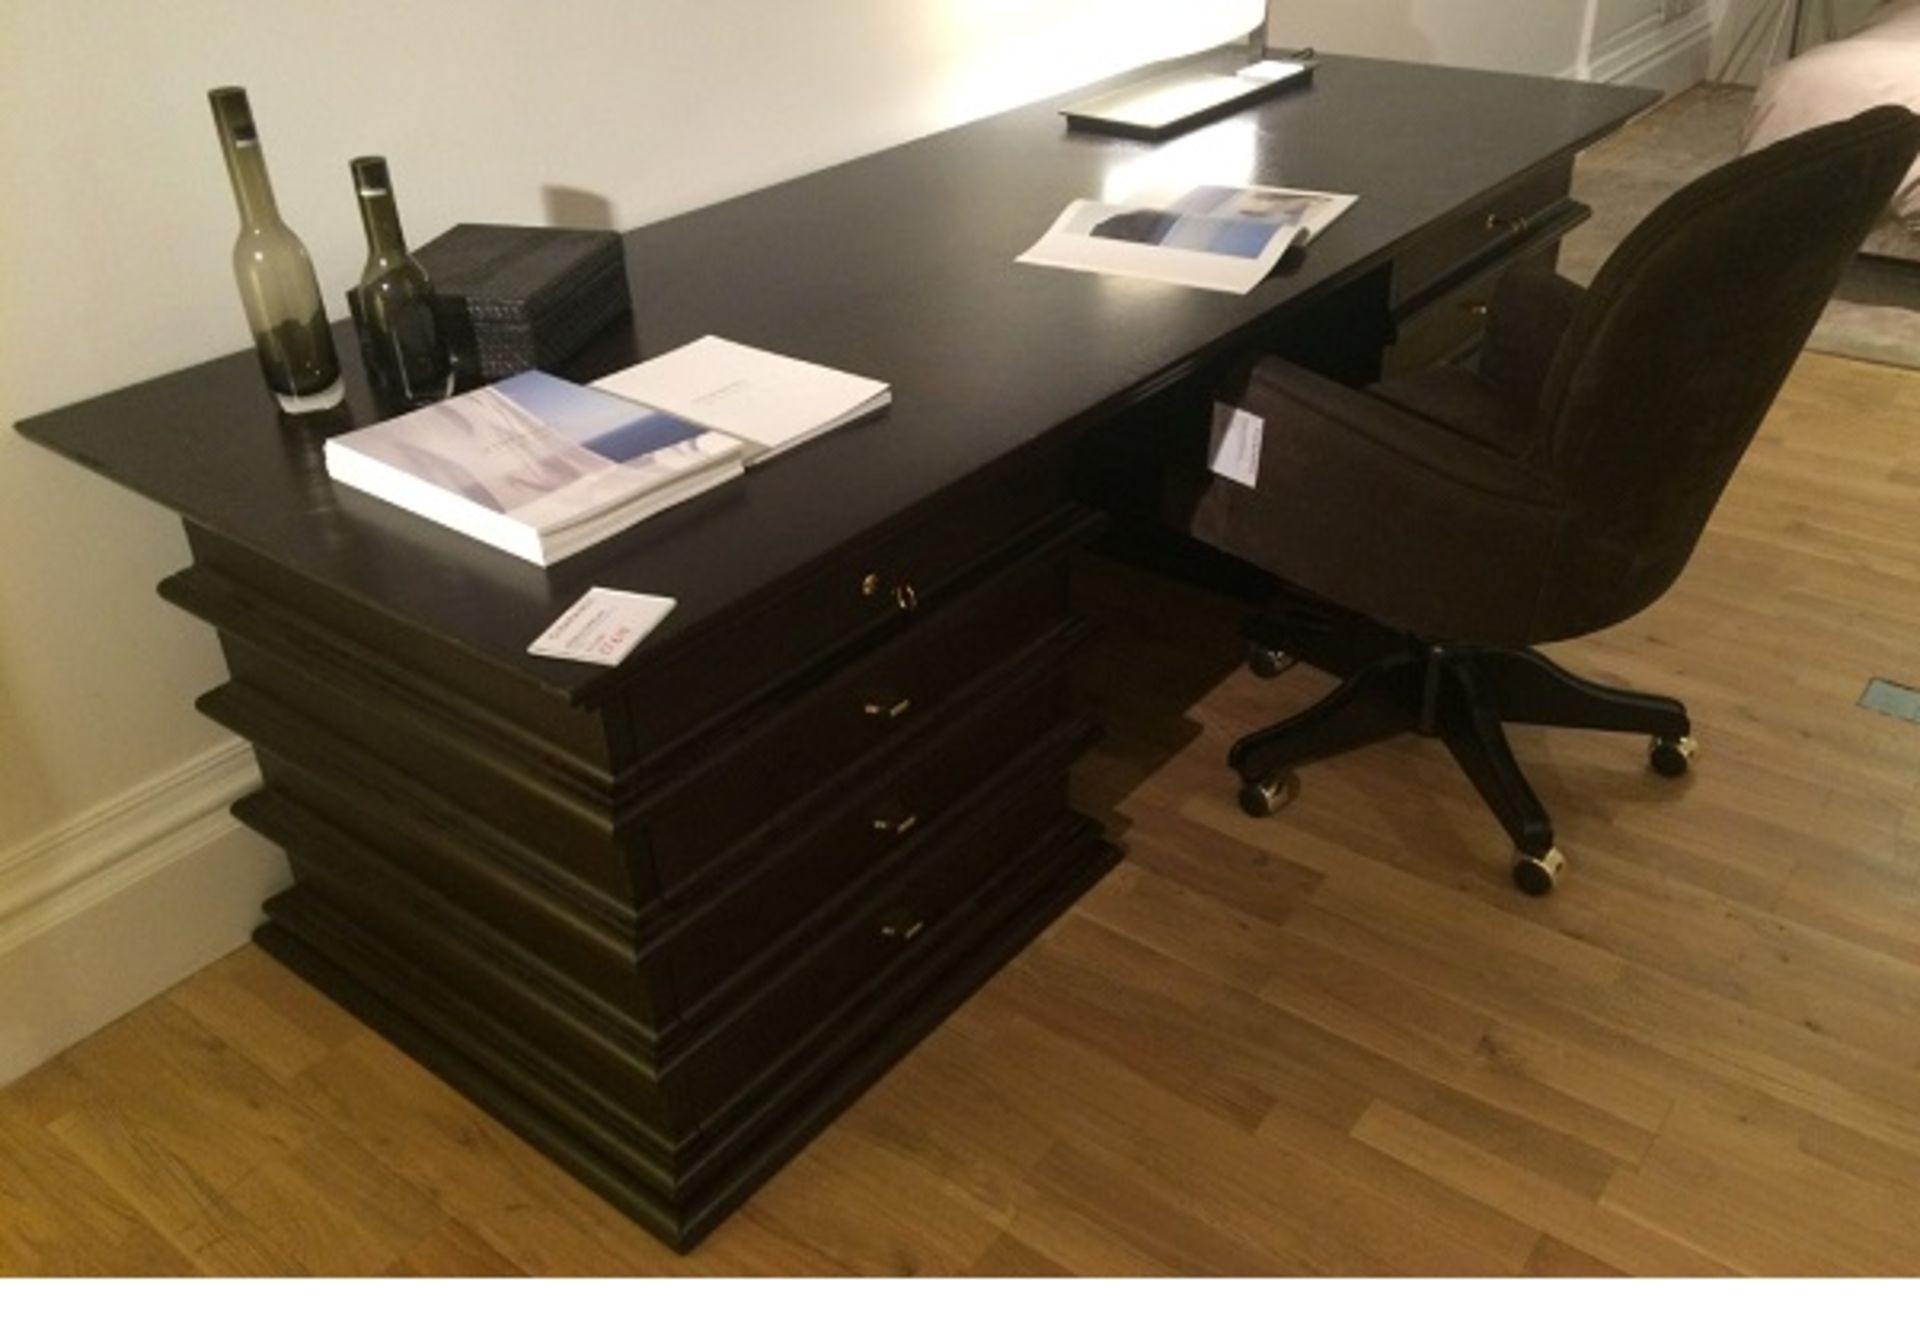 1 x OPERA Op Manon Writing Desk (Ss13) - Stunning Piece - 240cm Wide! - Ref: 3358572 – CL087 - - Image 2 of 12